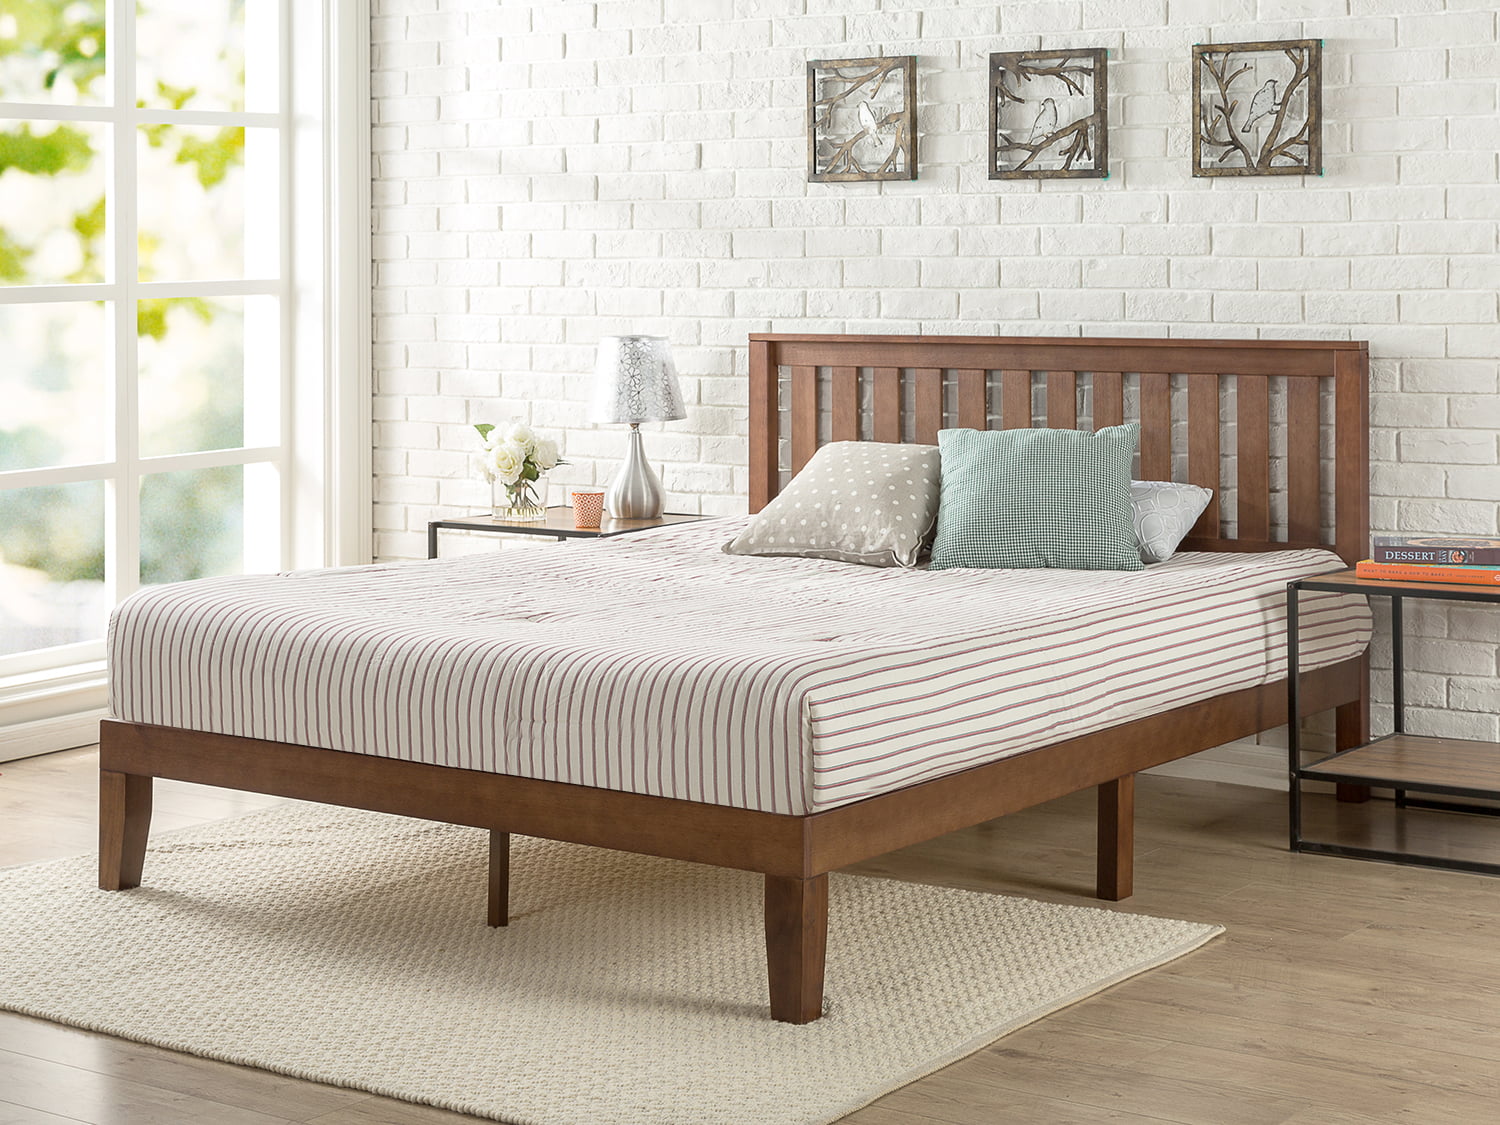 Zinus Vivek 37” Wood Platform Bed Frame with Headboard, King - Walmart